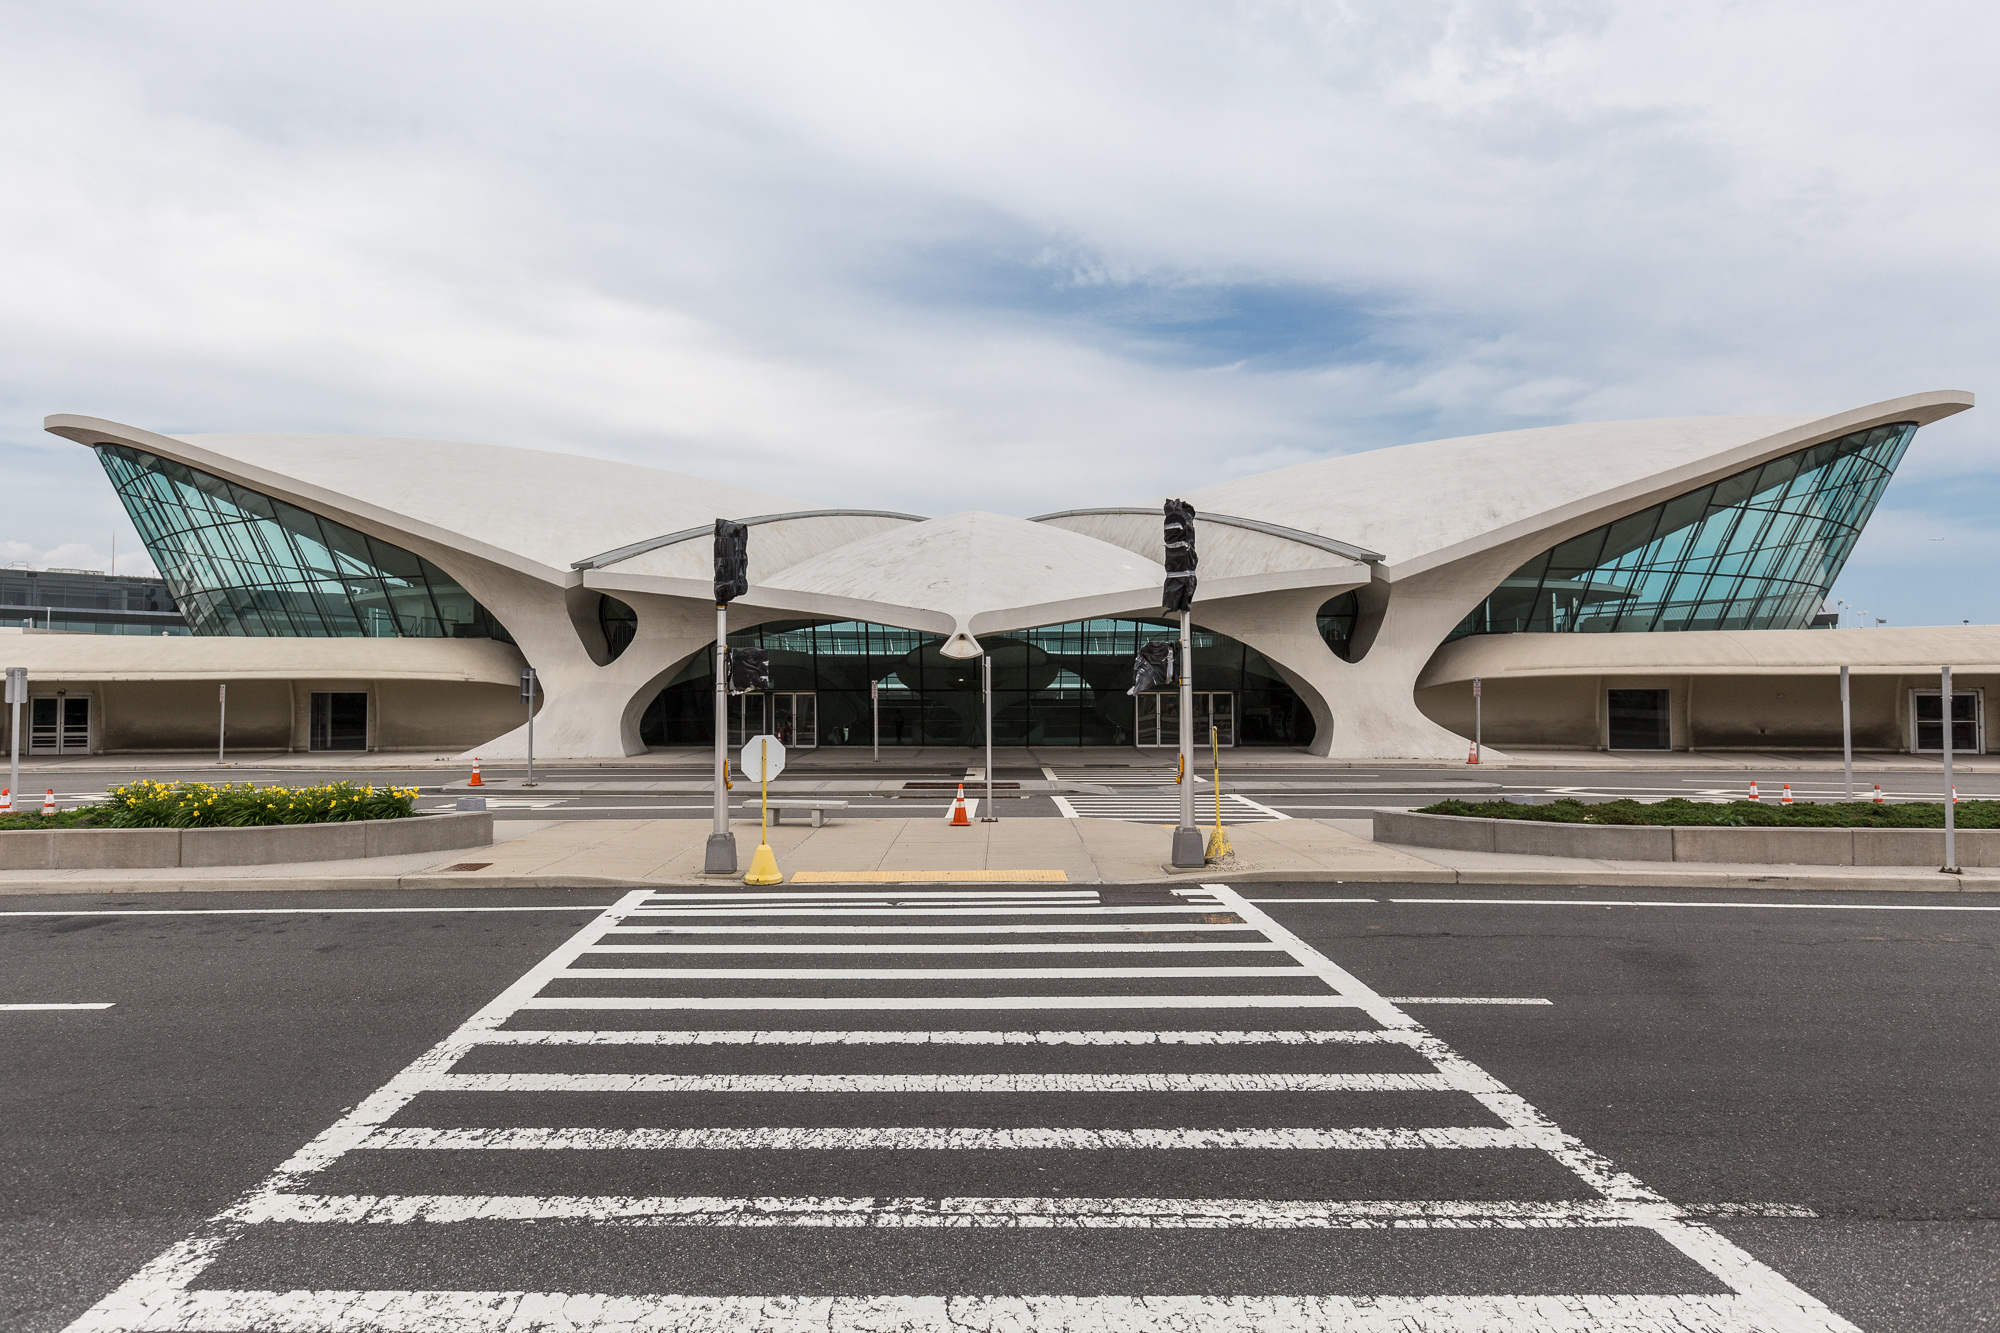 The JFK TWA Terminal